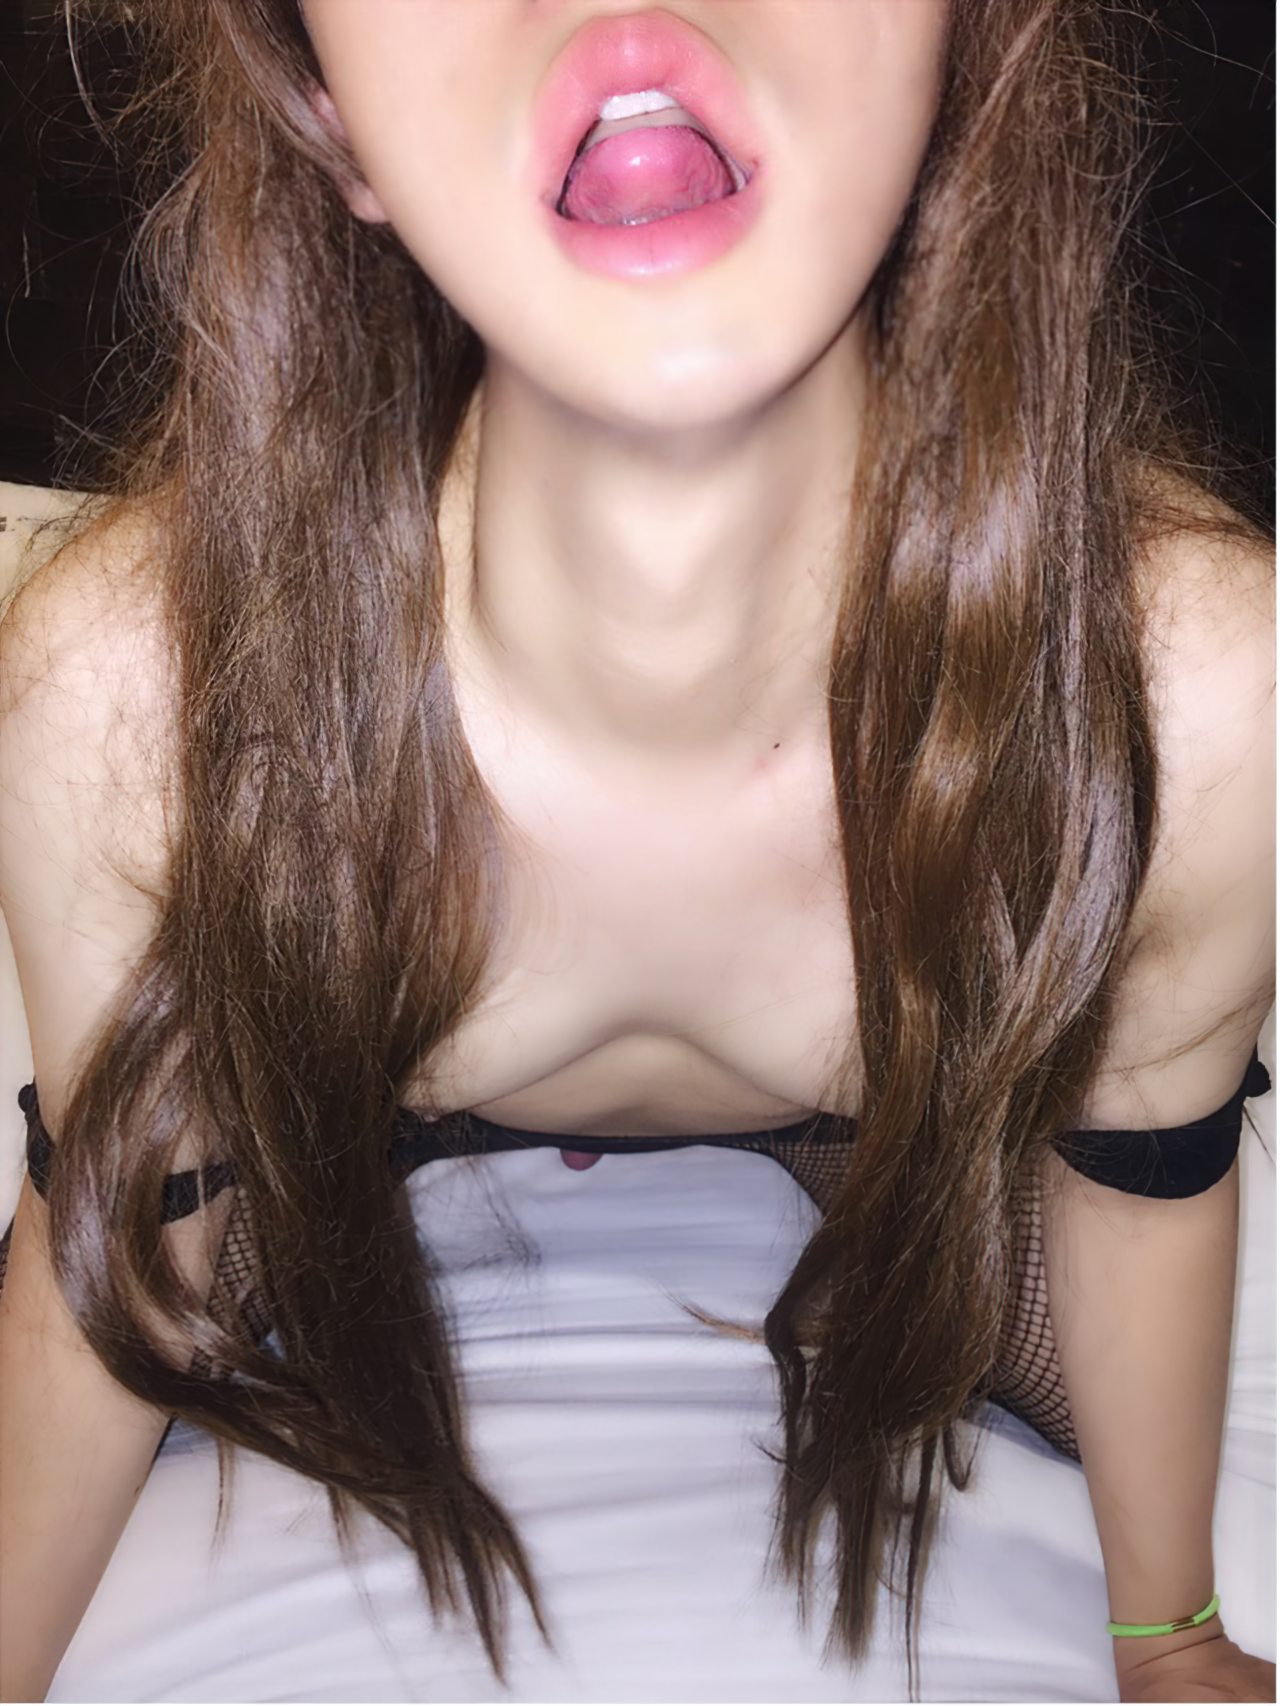 Travesti Adolescente Safada (9)